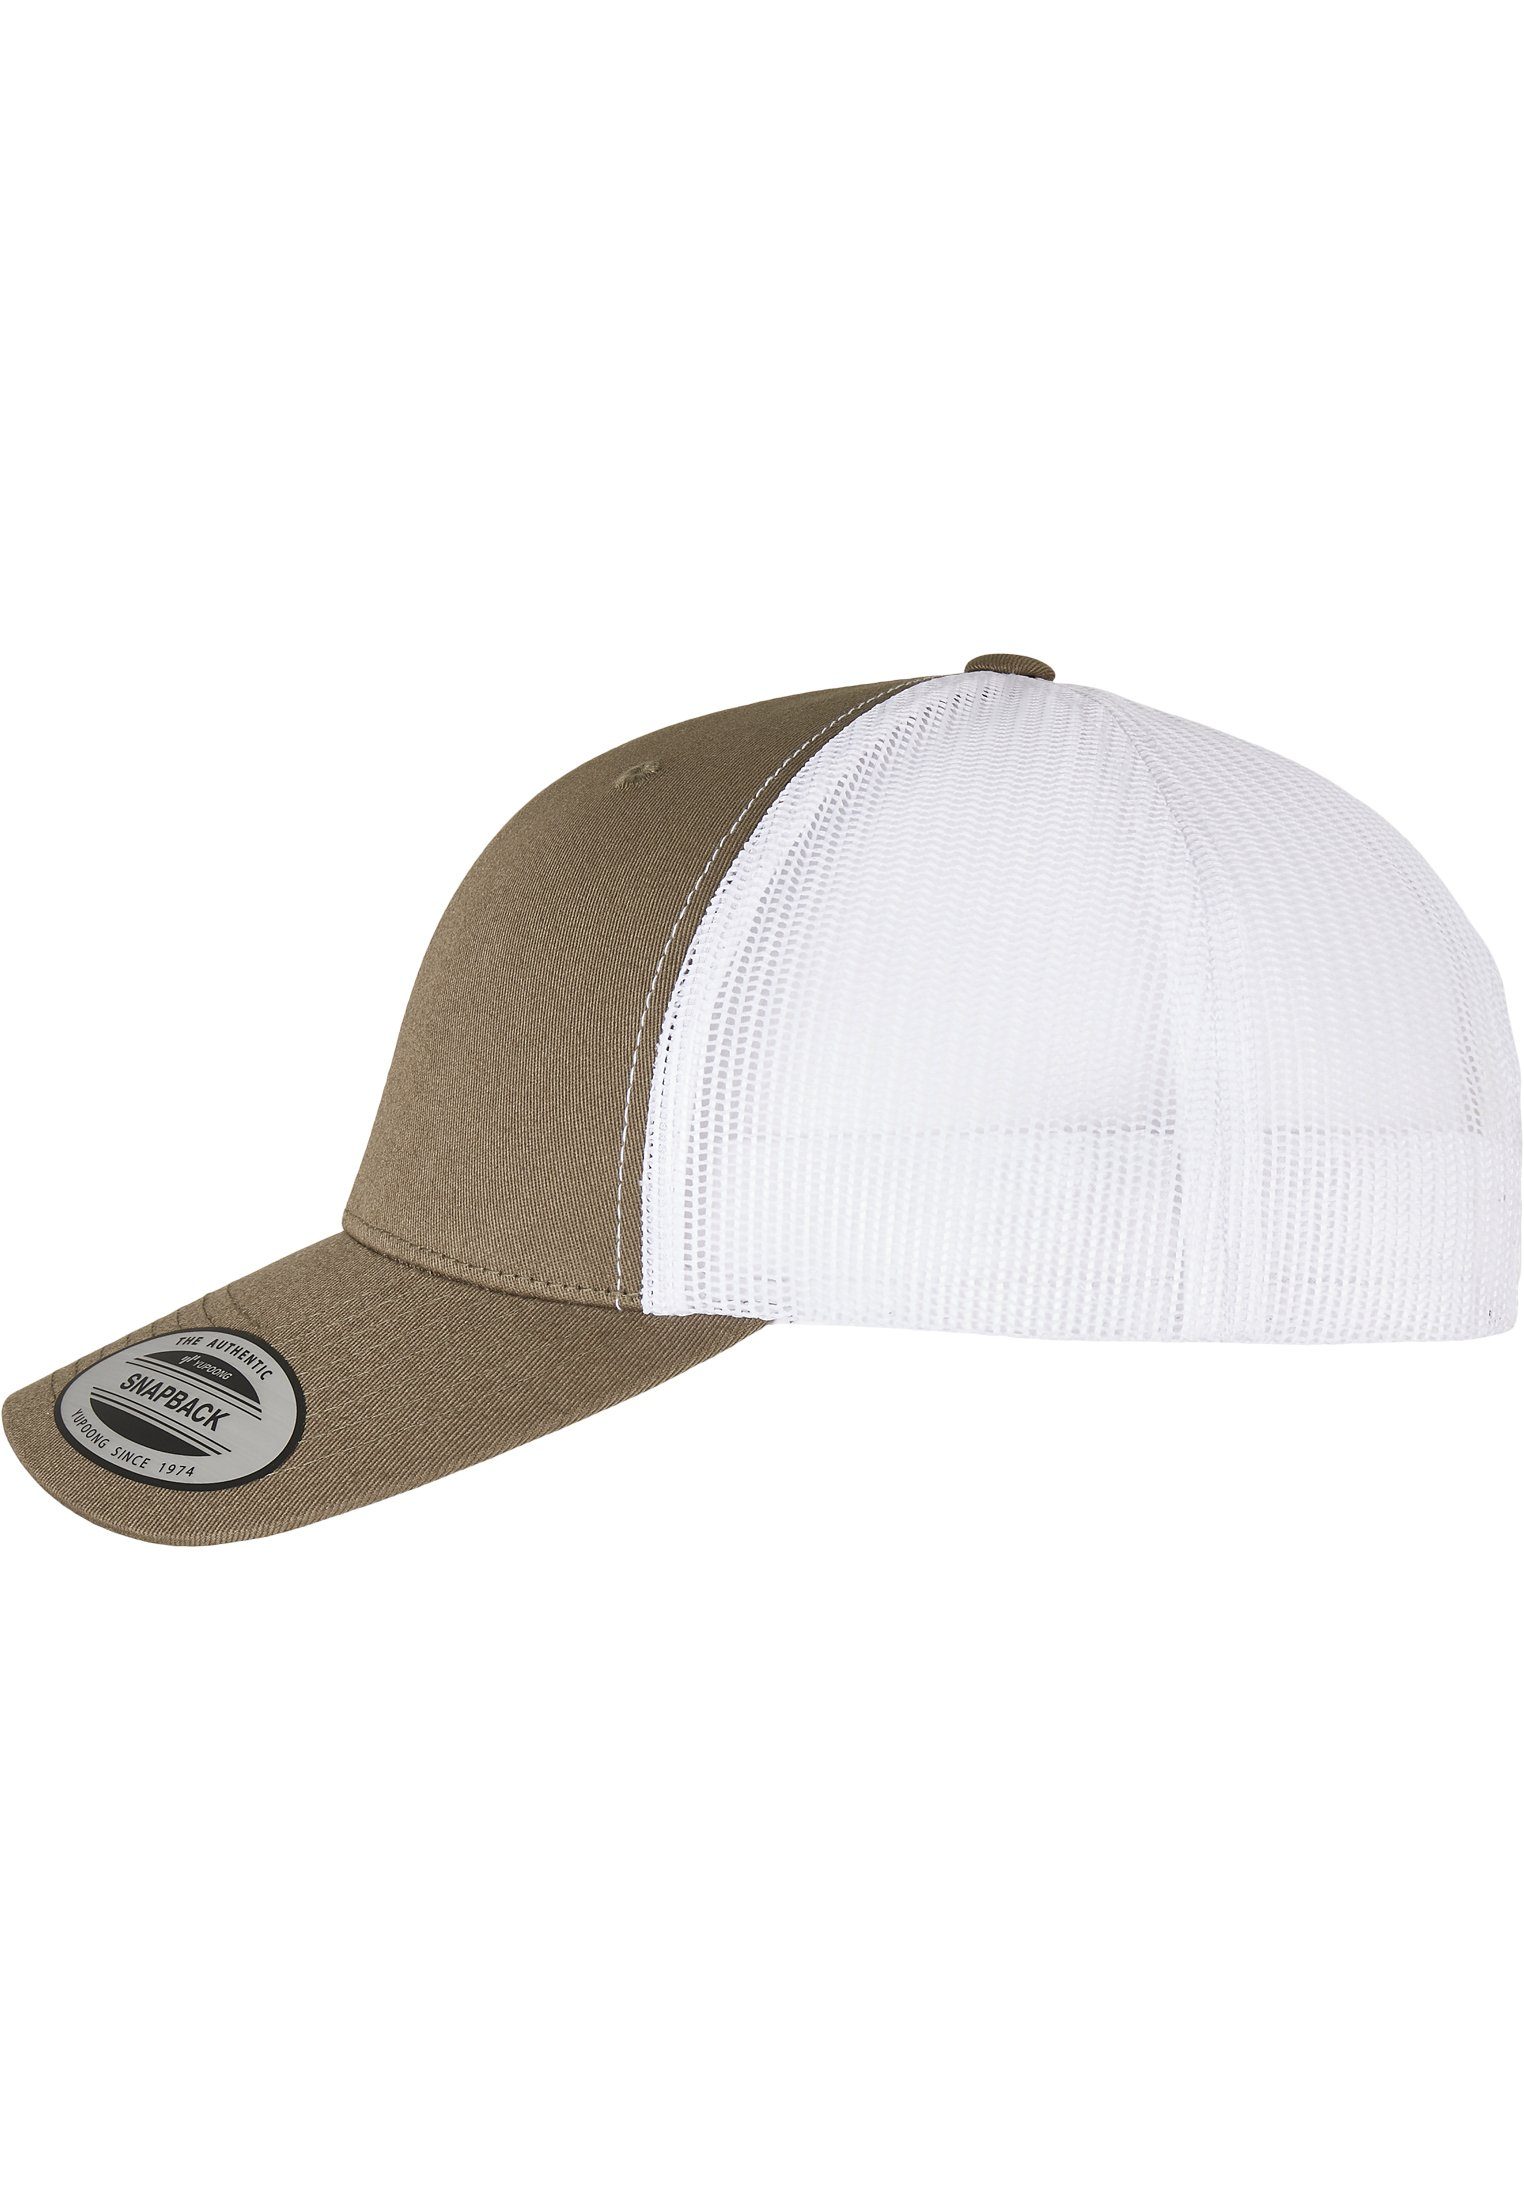 Flexfit Caps YP RECYCLED RETRO CLASSICS 2-TONE olive/white Cap TRUCKER Flex CAP